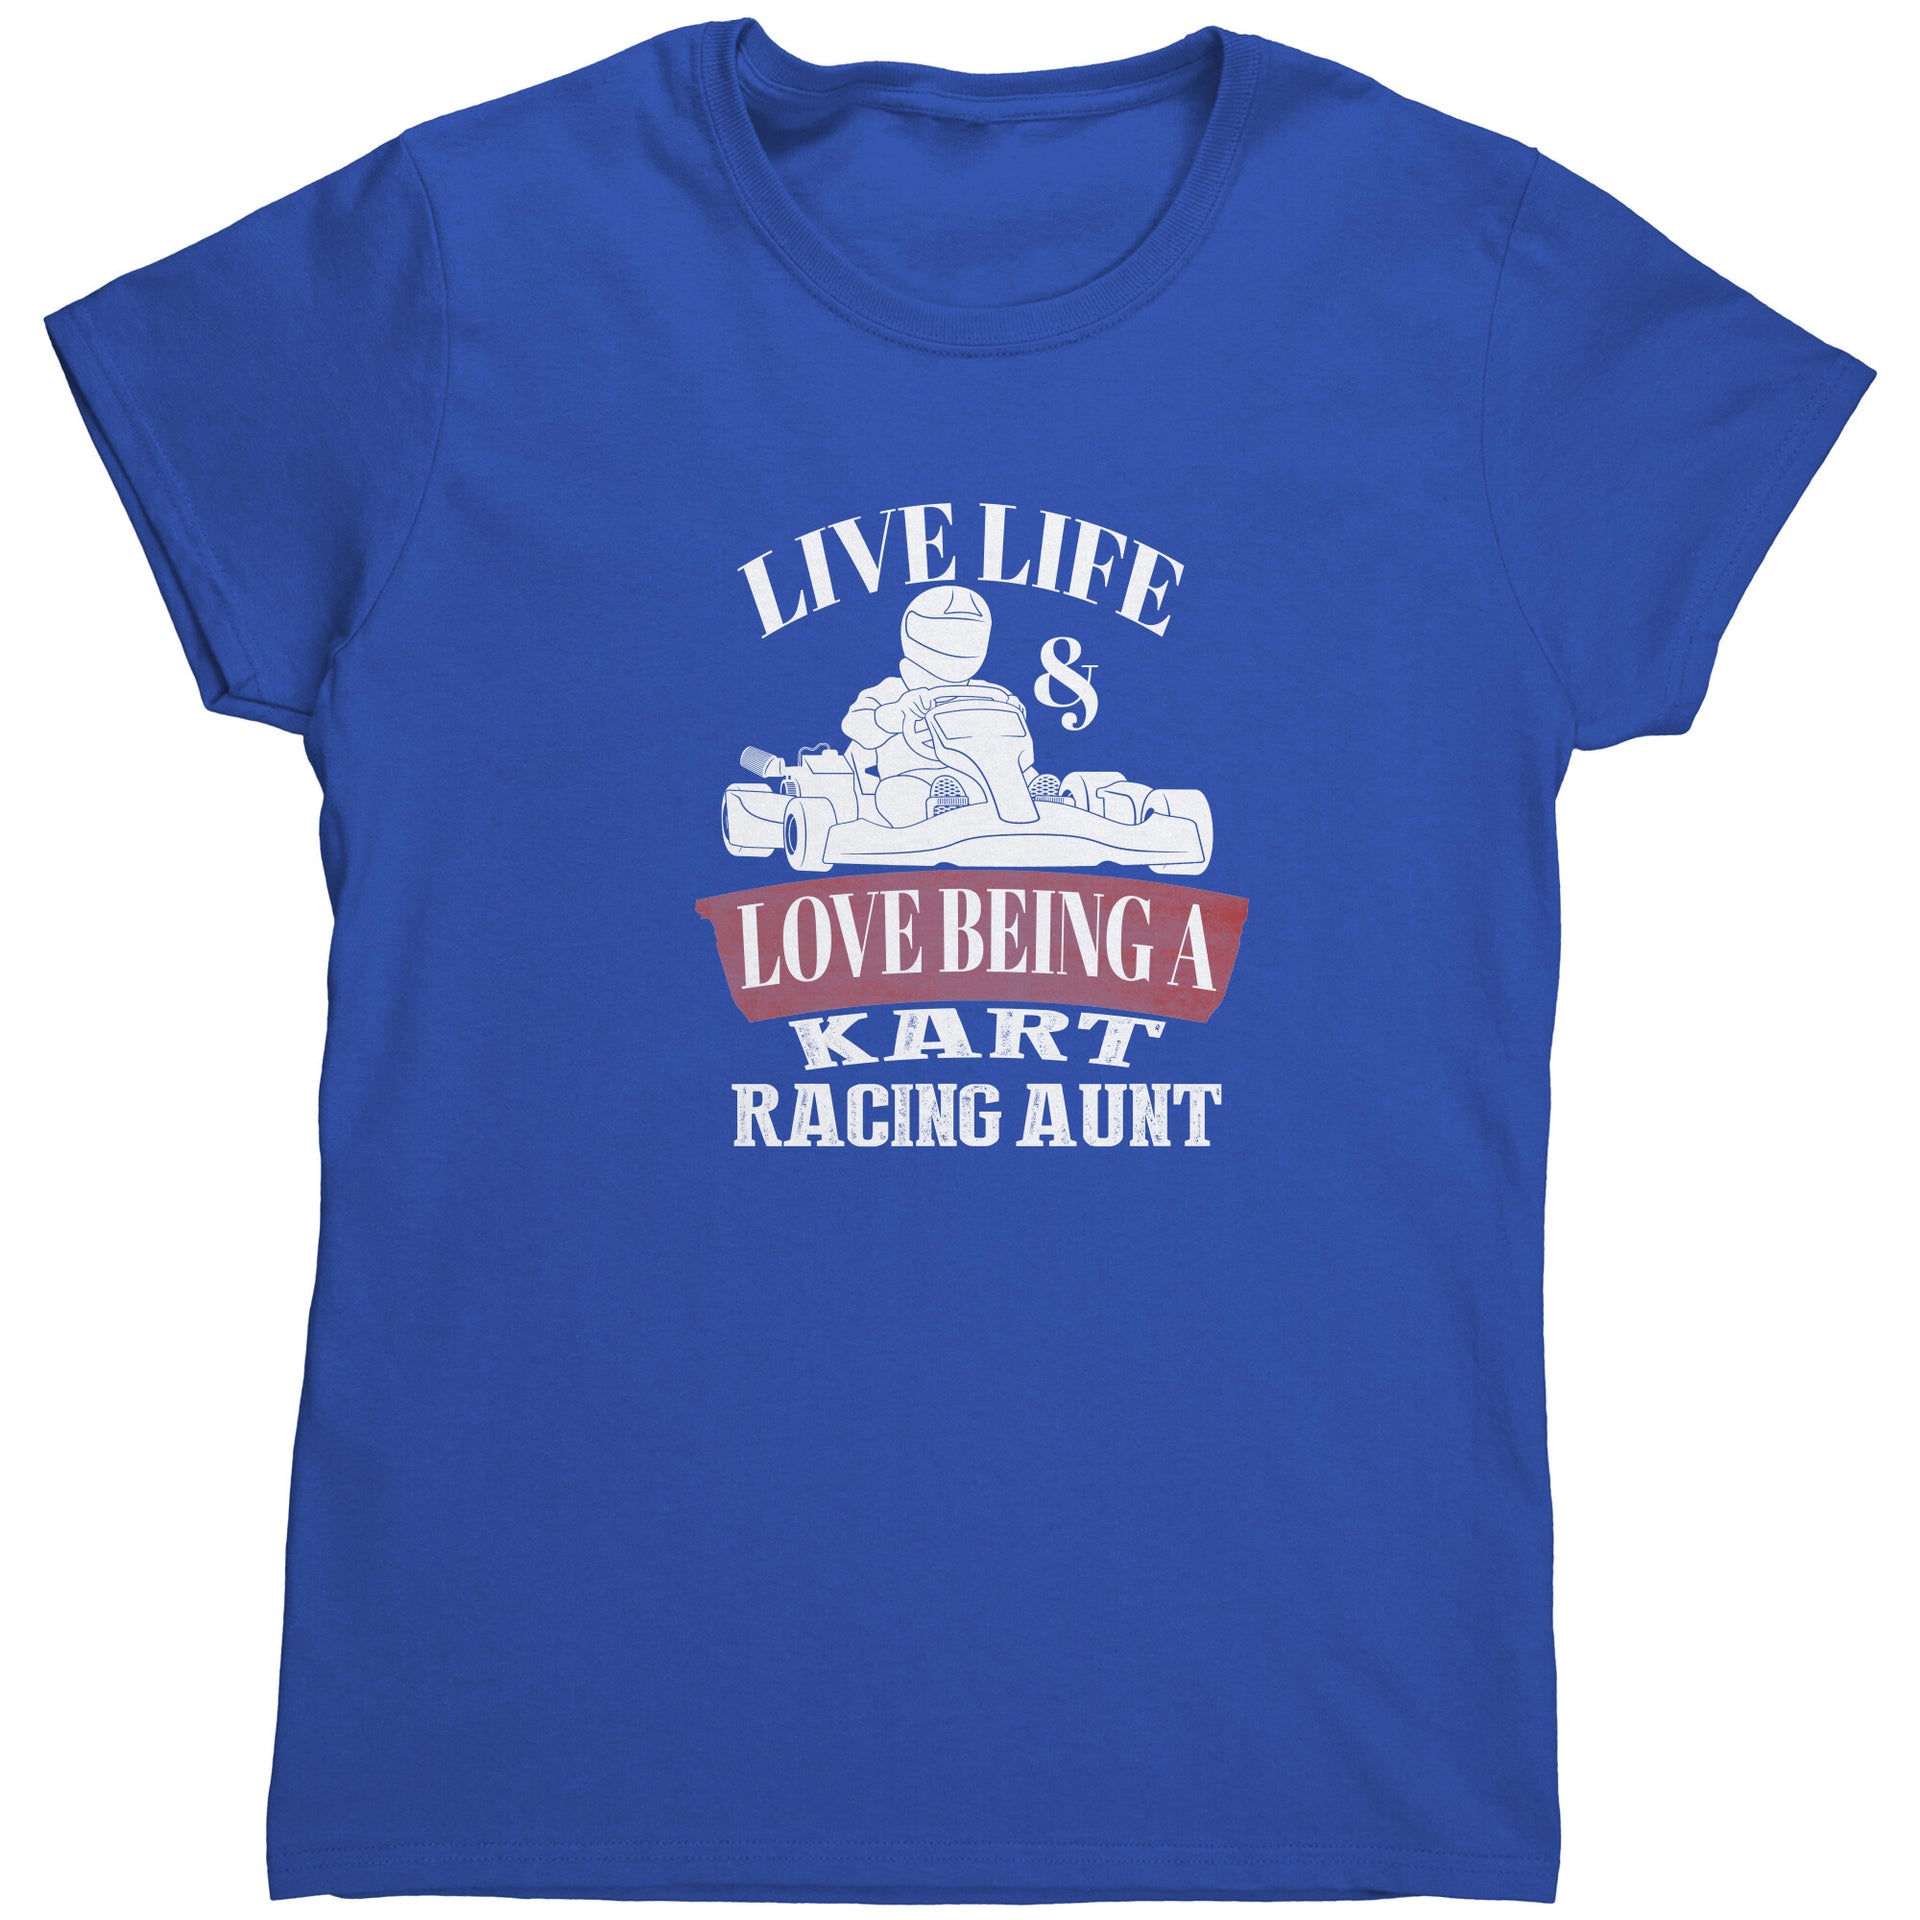 kart racing aunt t-shirts